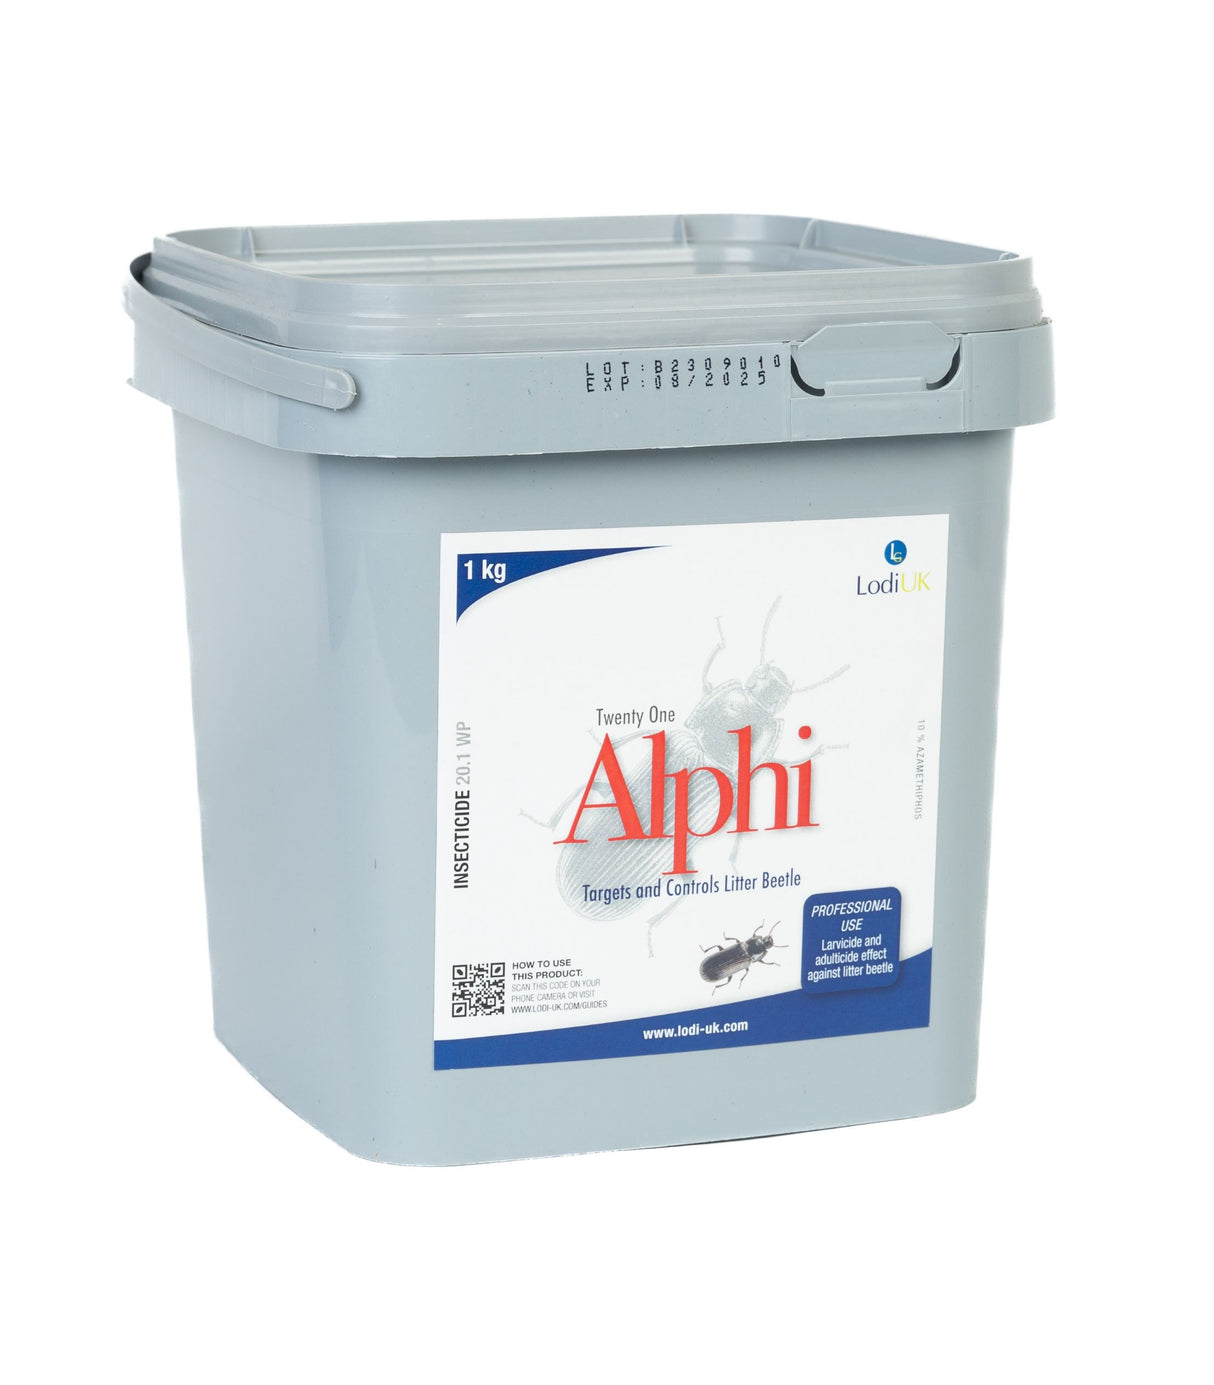 Alphi Wettable Powder Adulticide for Litter Beetle - 1kg